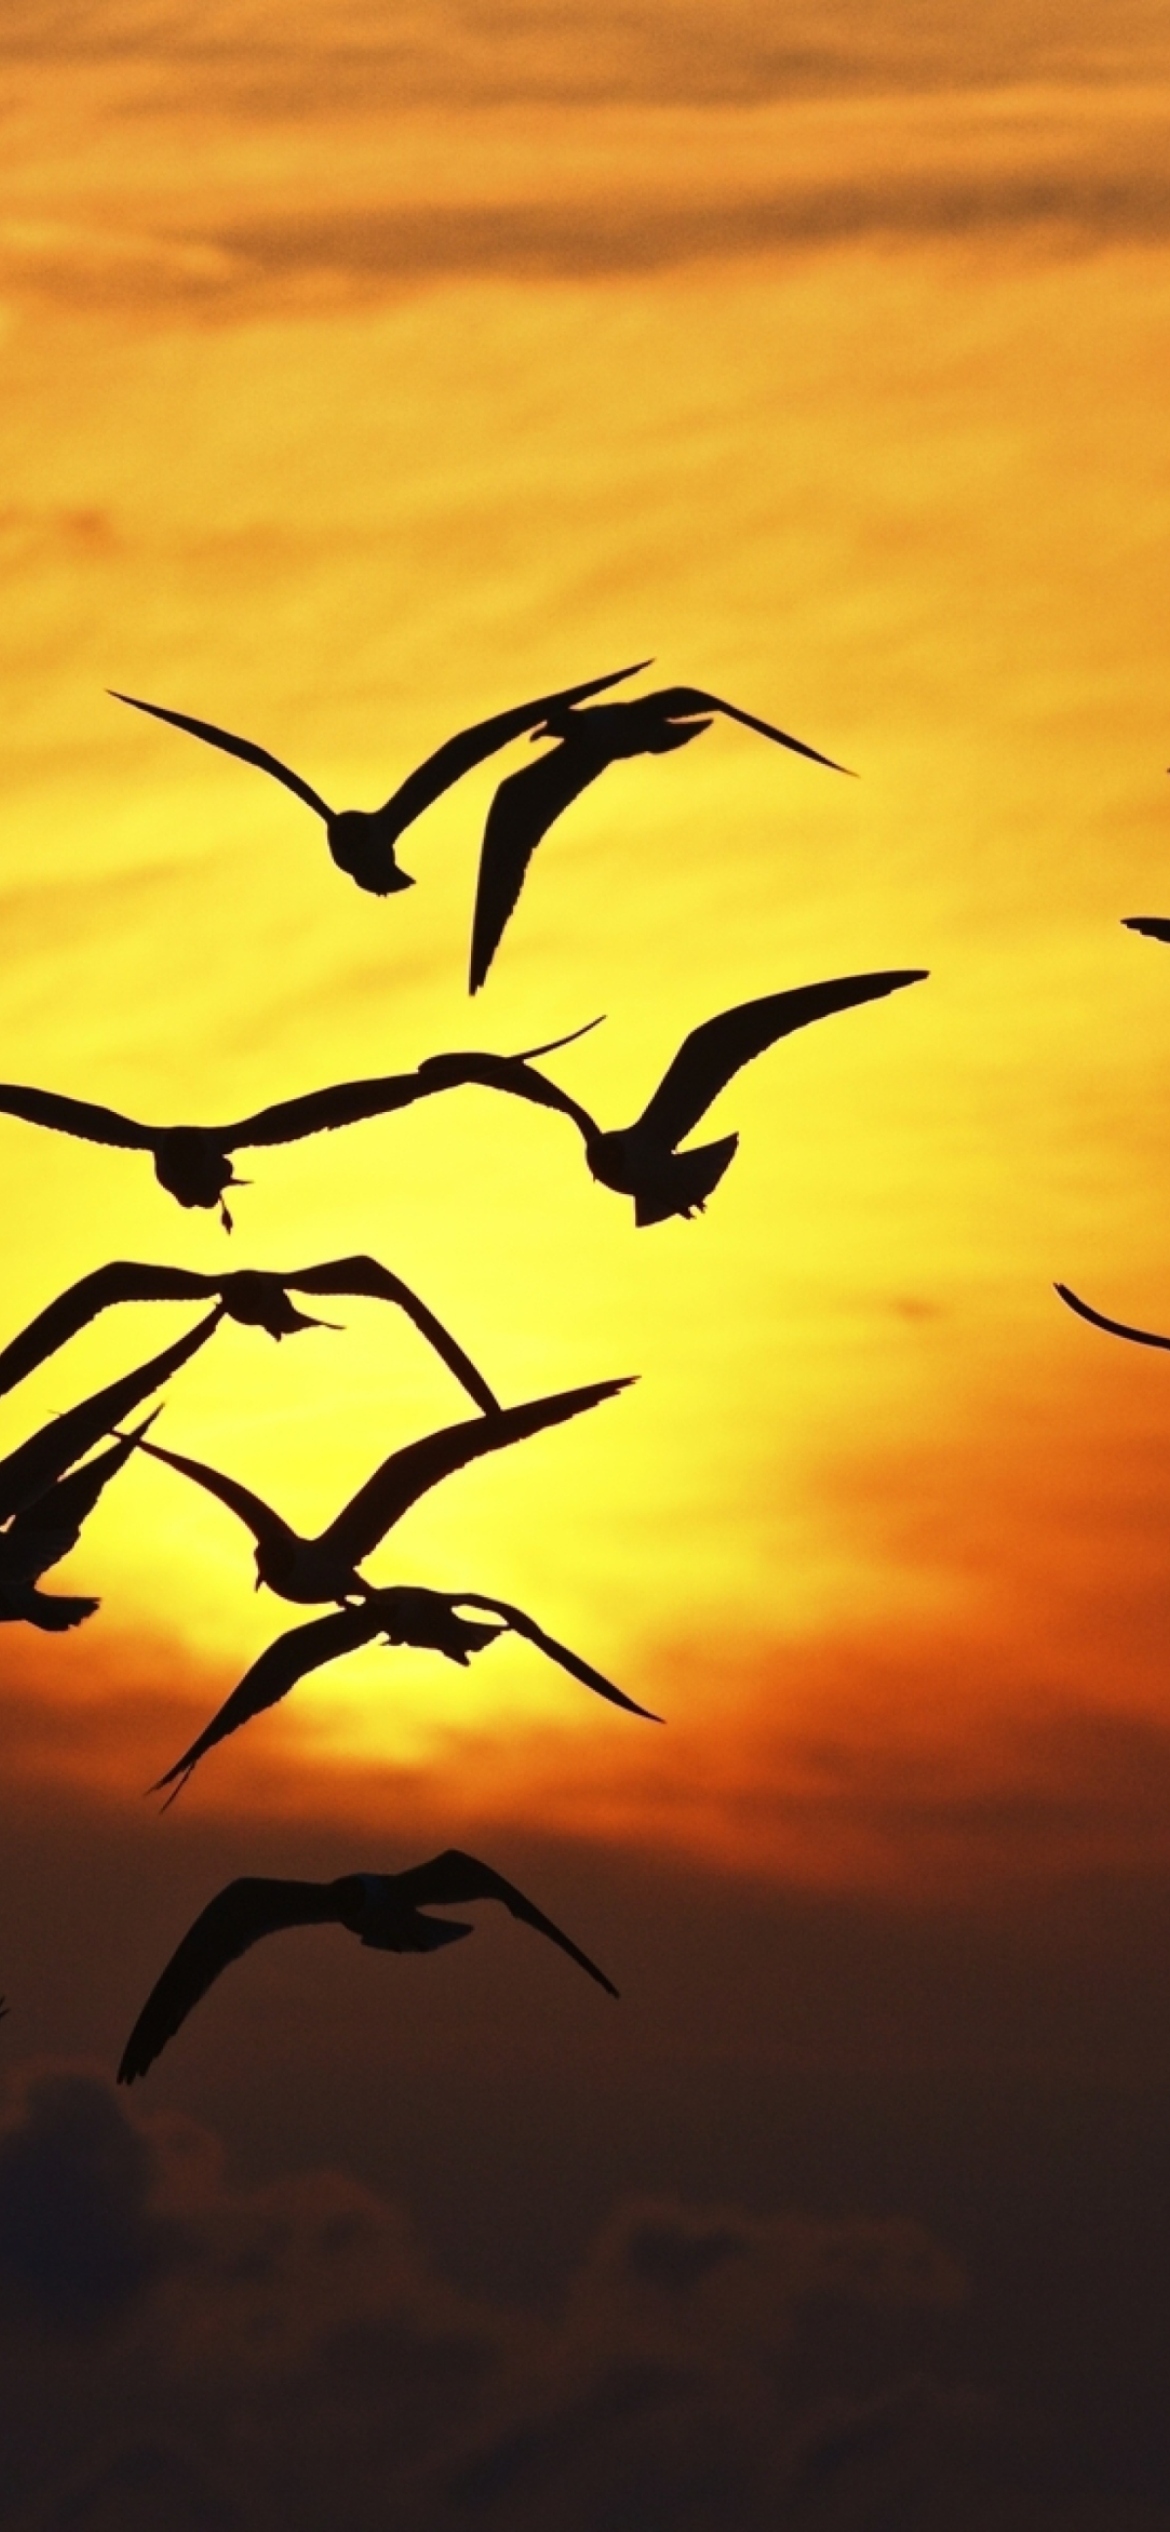 Sfondi Birds Silhouettes At Sunset 1170x2532